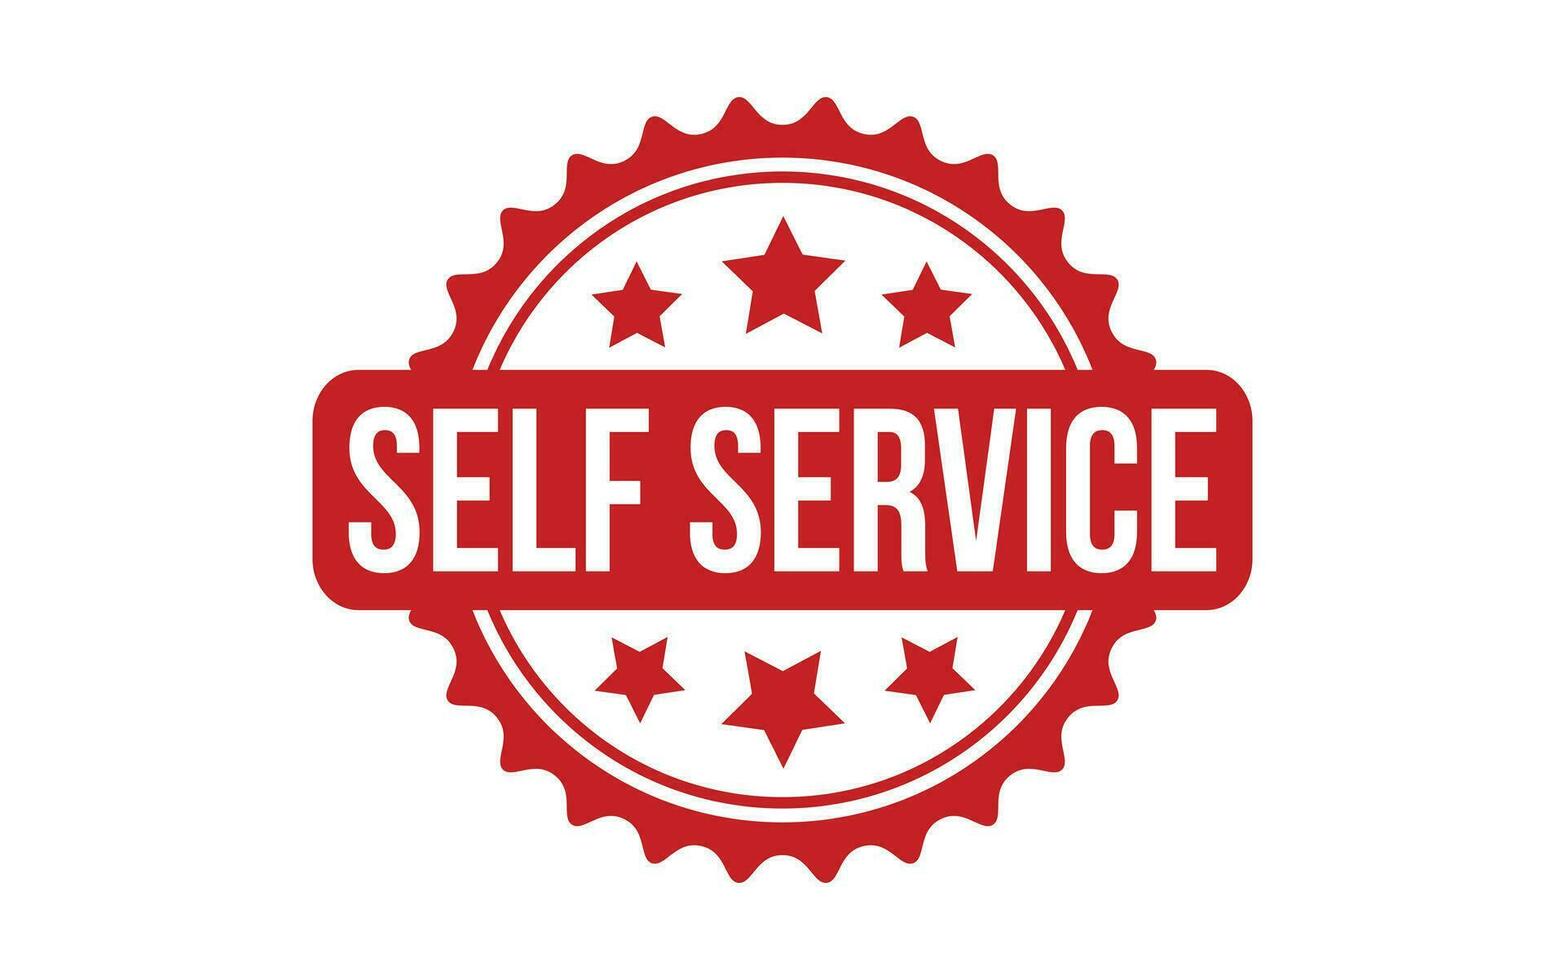 Self Service rubber grunge stamp seal vector